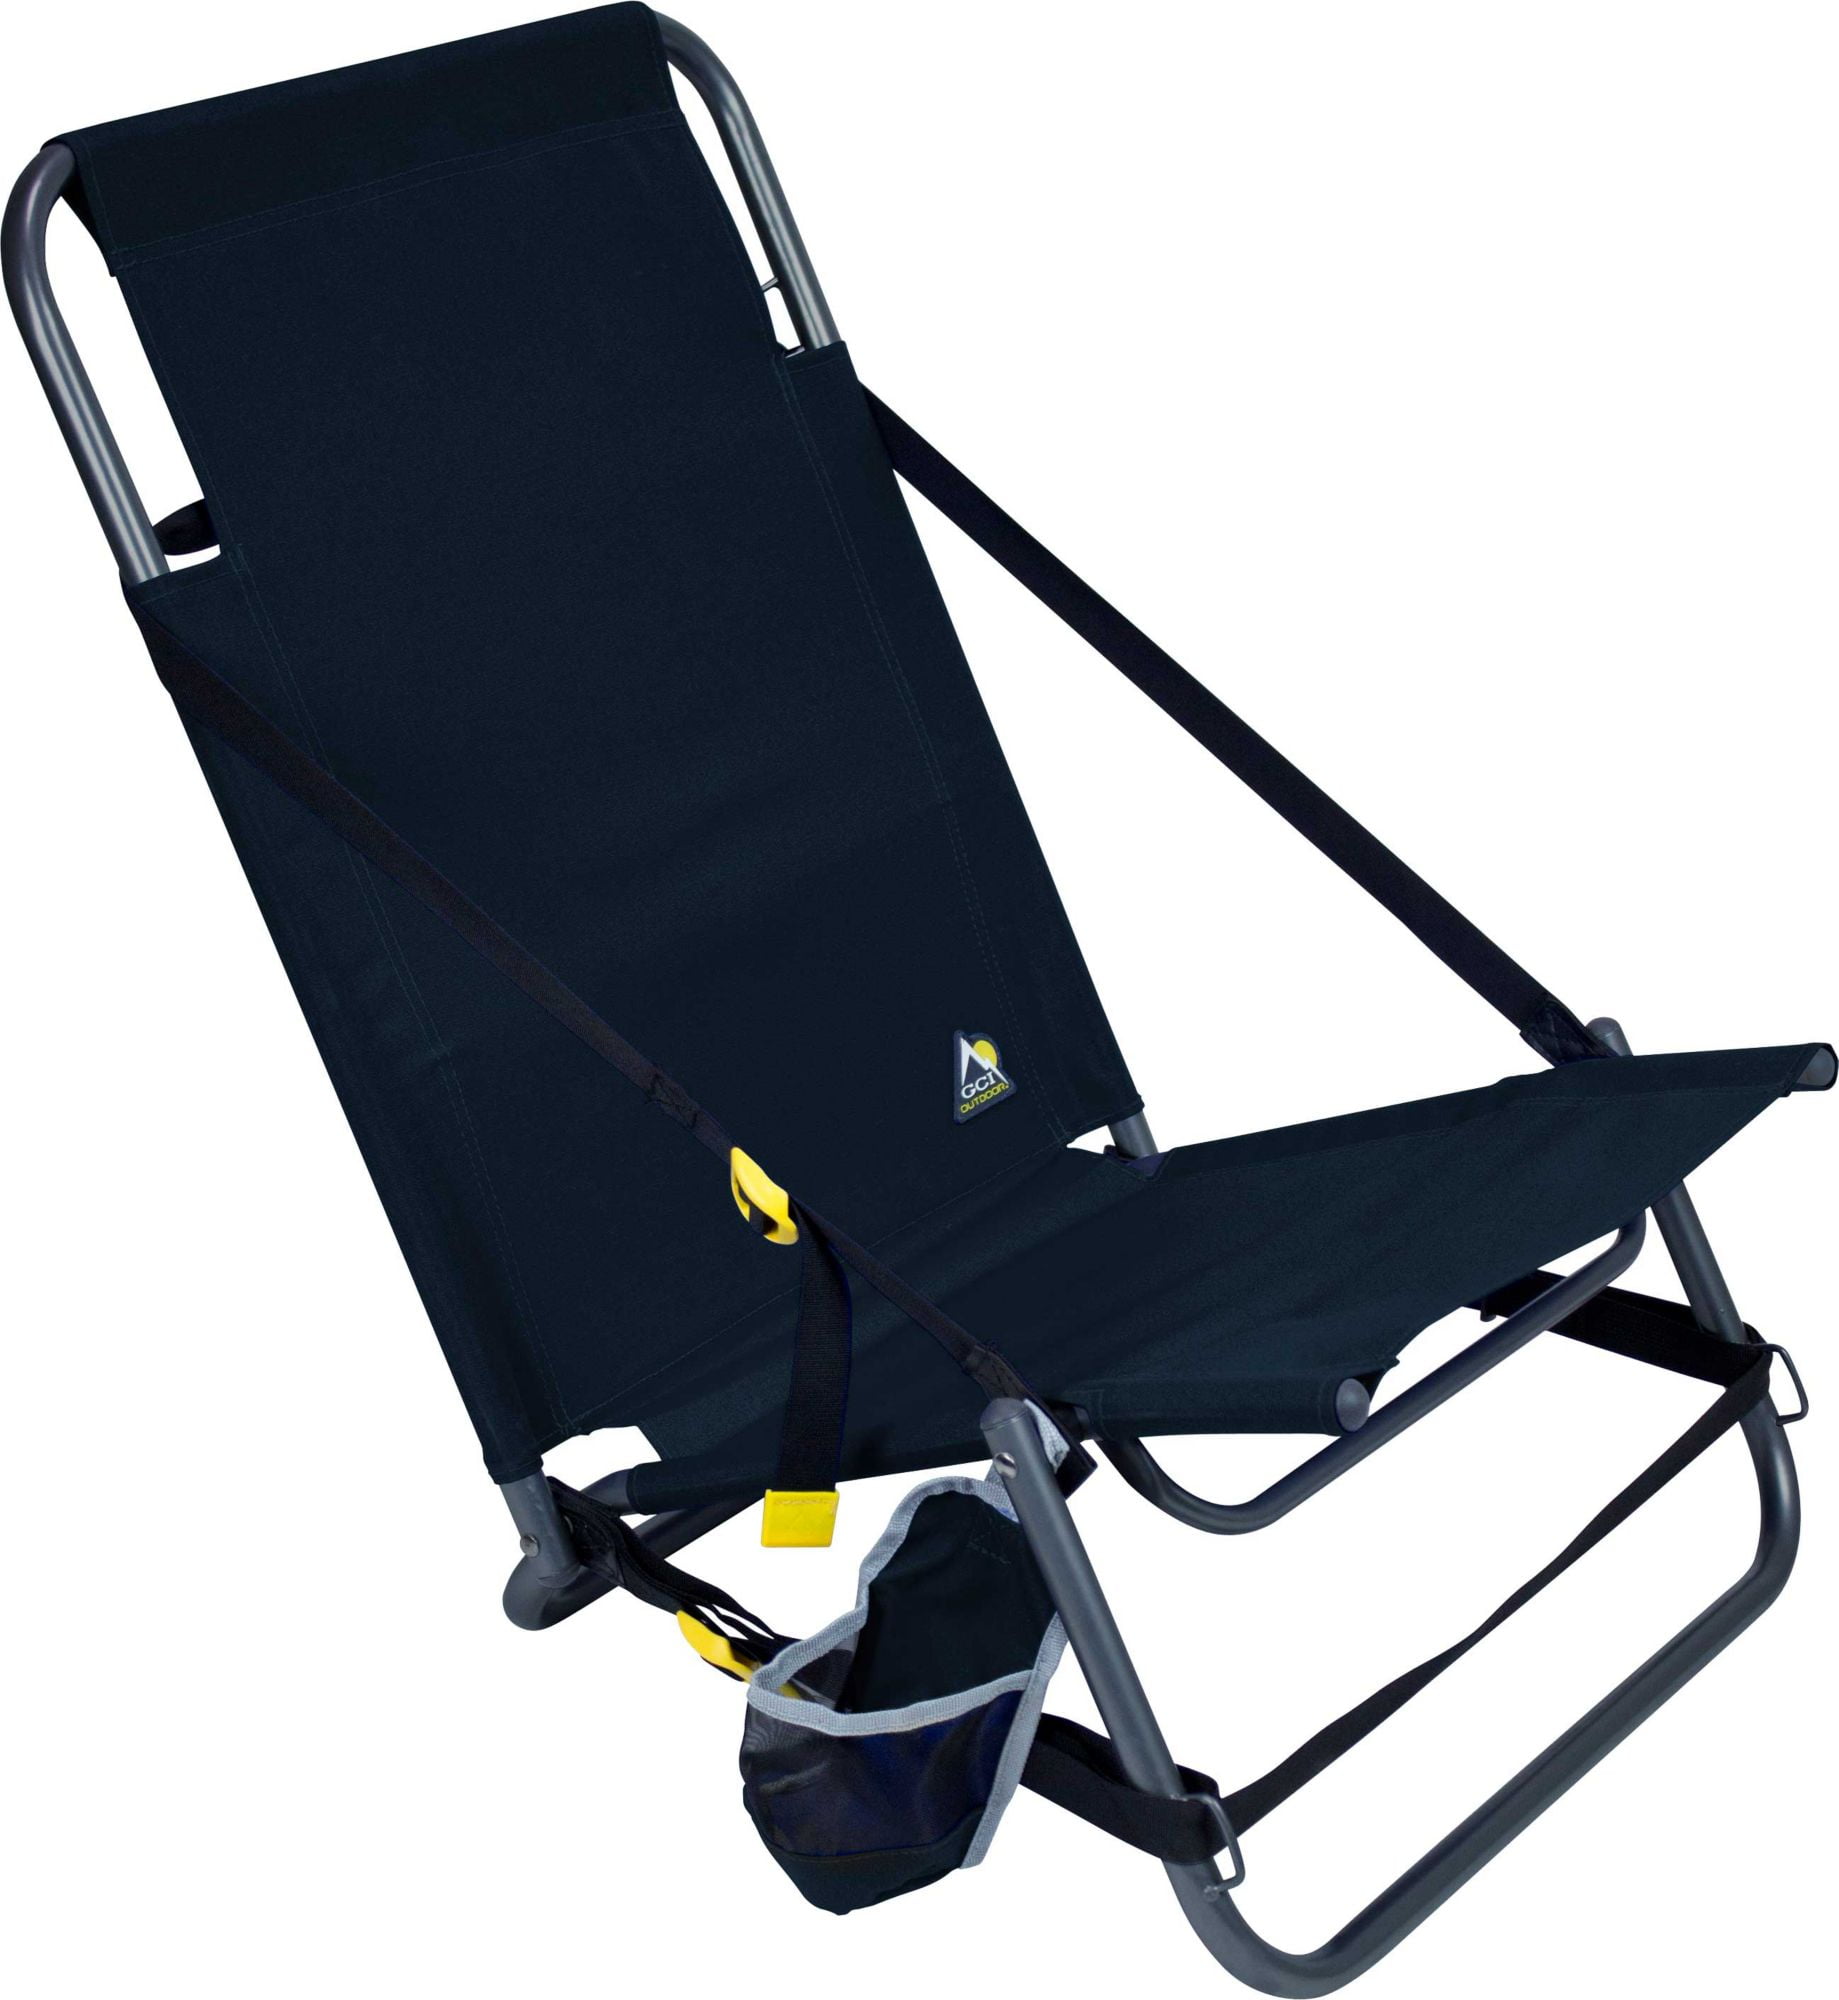 gci outdoor everywhere portable hillside chair